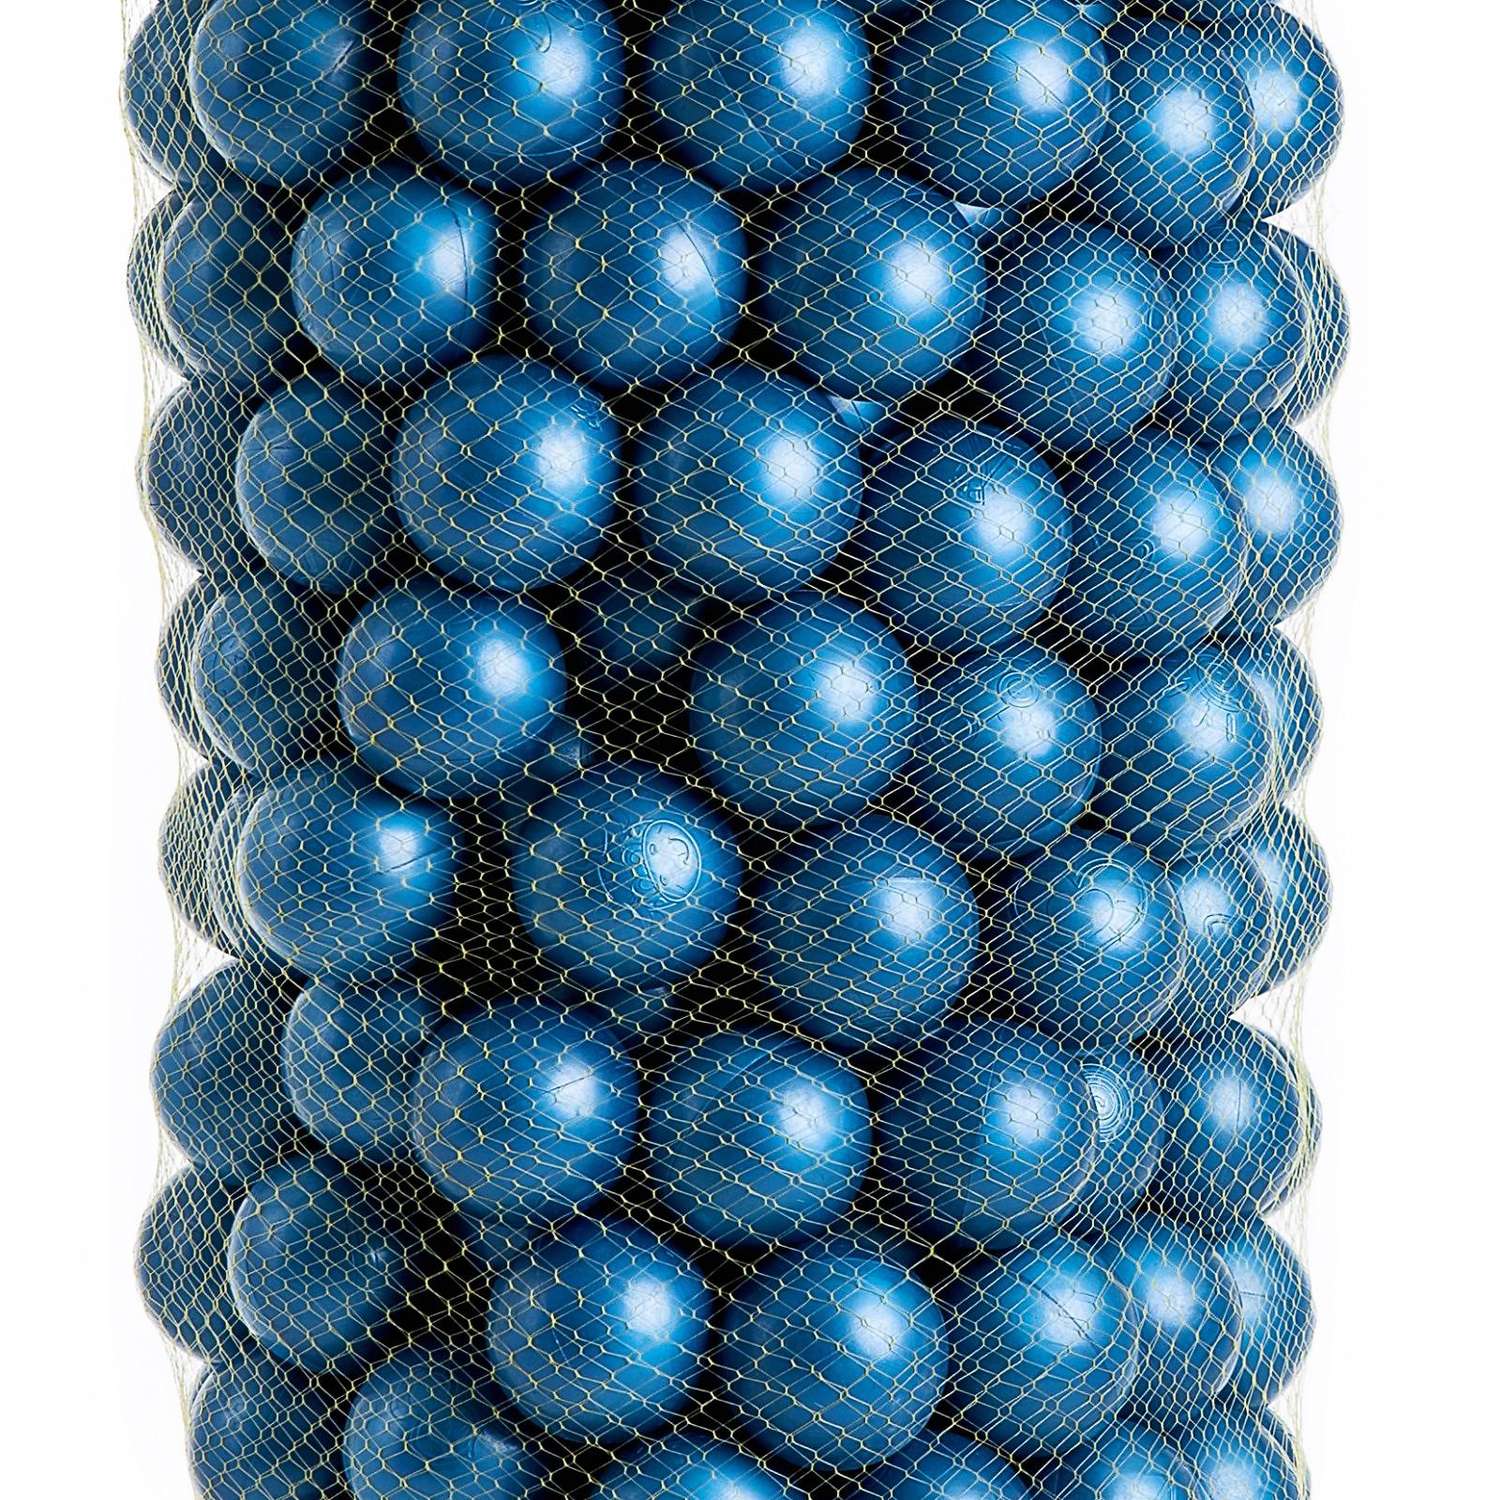 Шарики для сухого бассейна Соломон 500 шт цвет синий металлик - фото 3